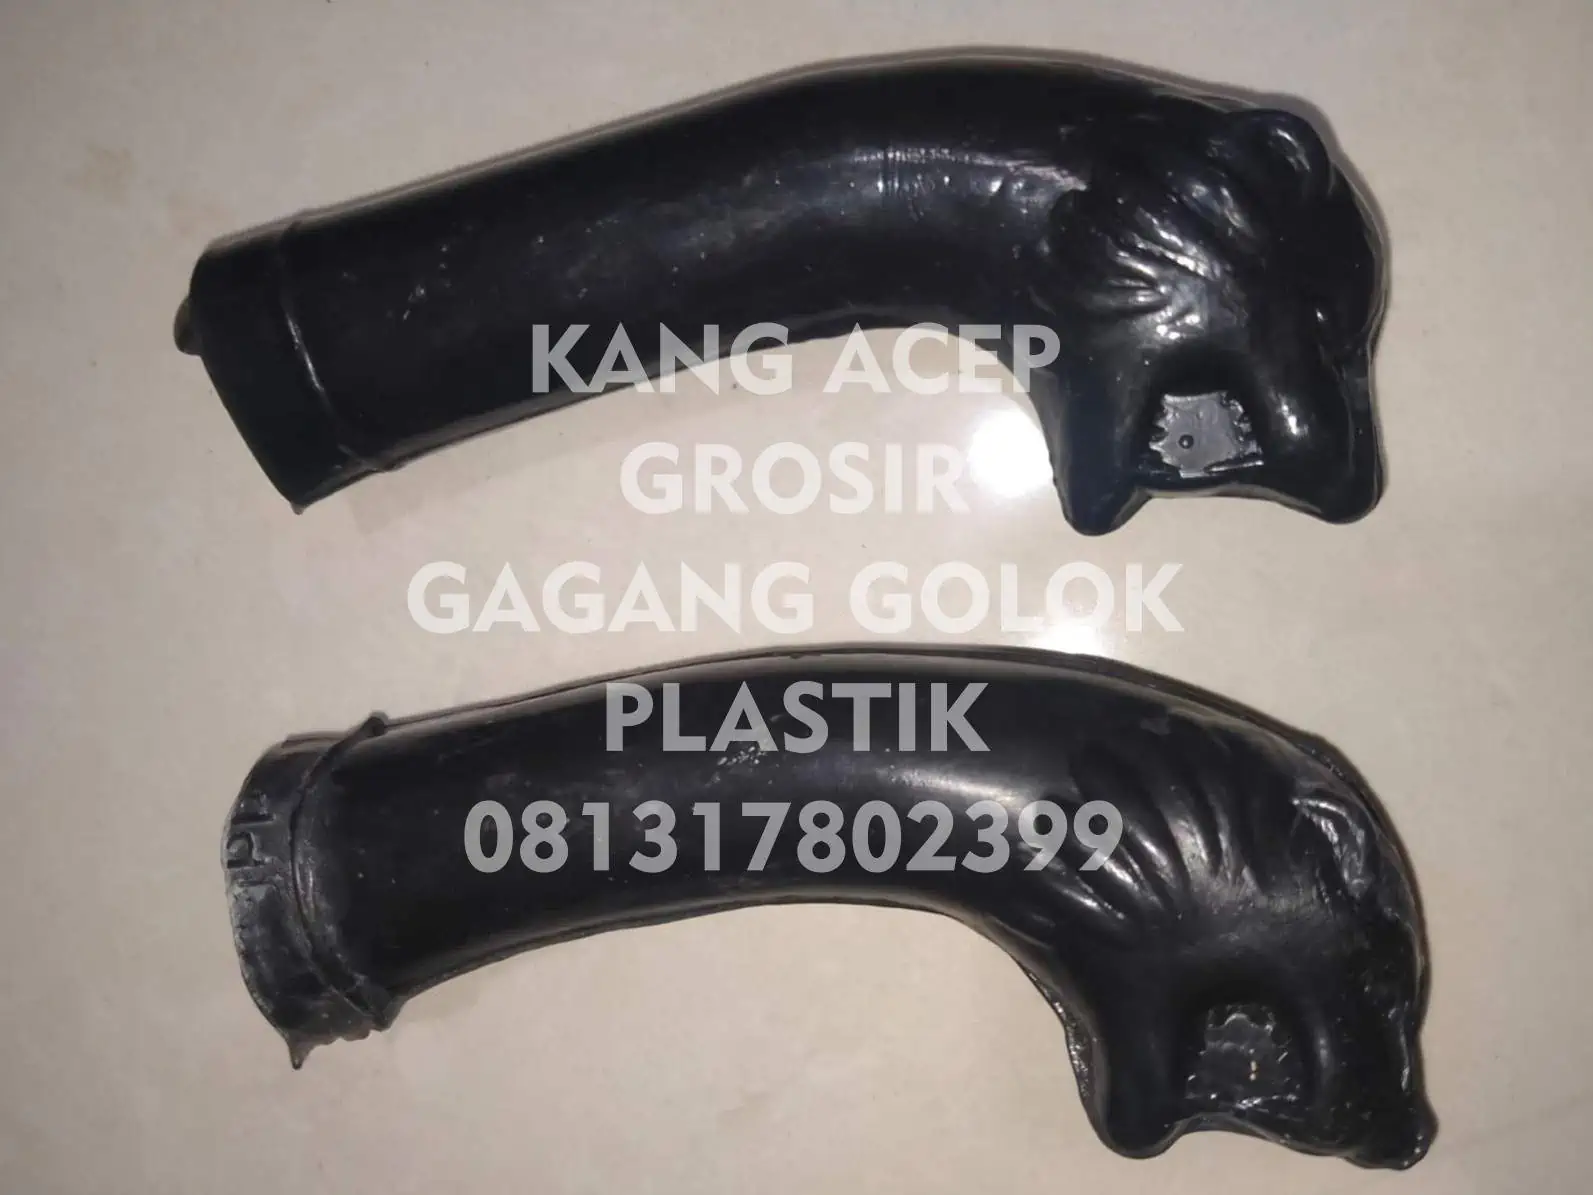 Grosir Gagang Golok Plastik di Bandung Model Kepala Singa Hitam